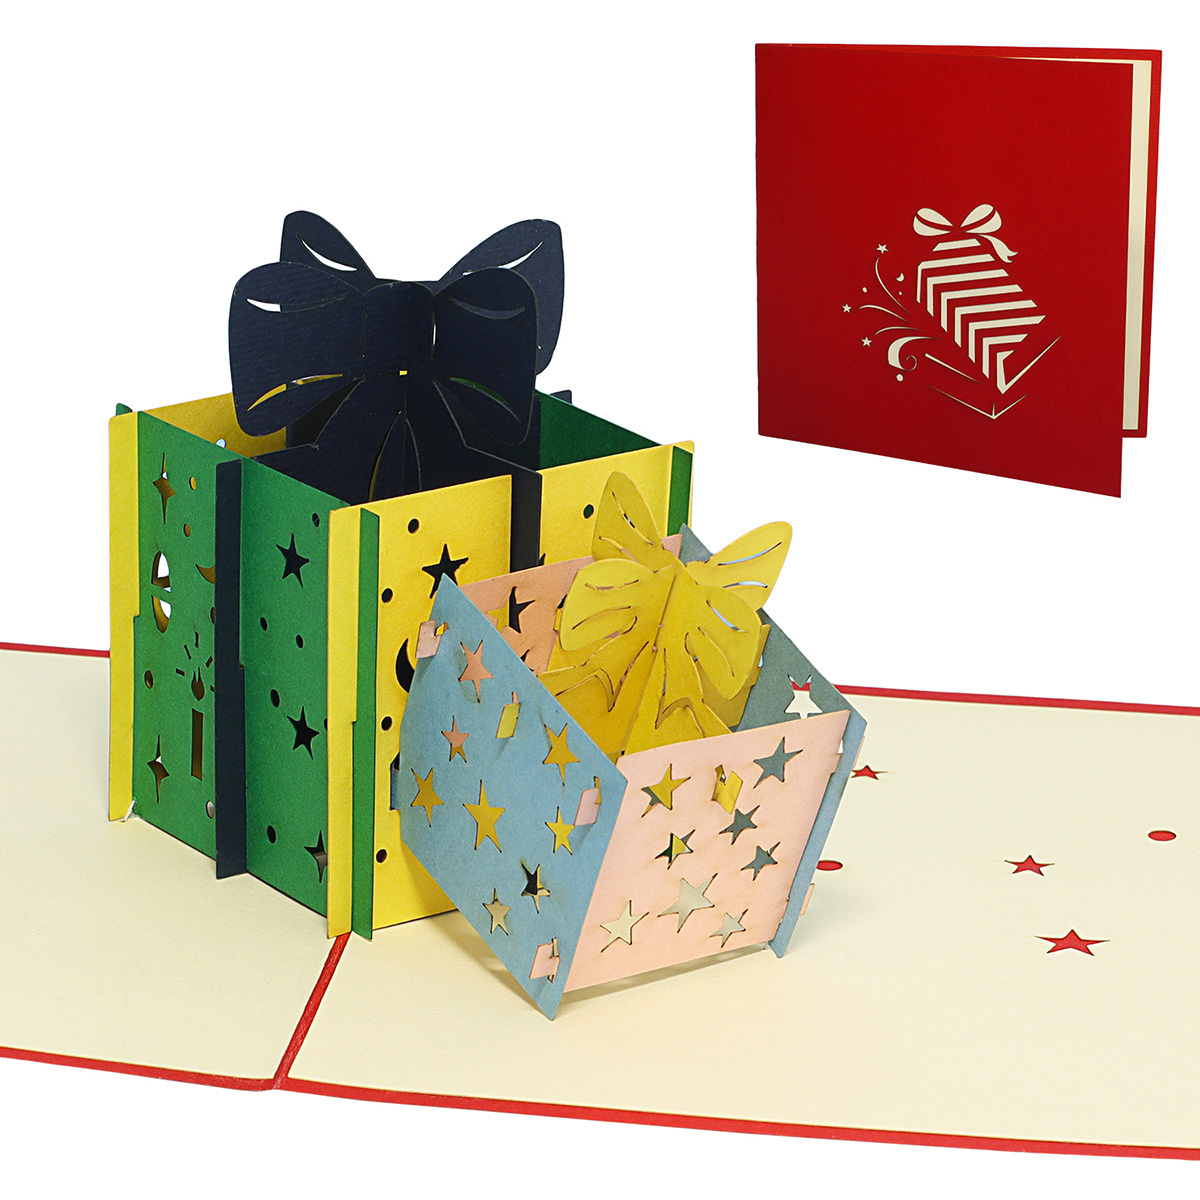 LINPOPUP Pop Up 3D Card, Christmas Card, Greeting Card, Christmas Gifts, LIN17568, LINPopUp®, N336